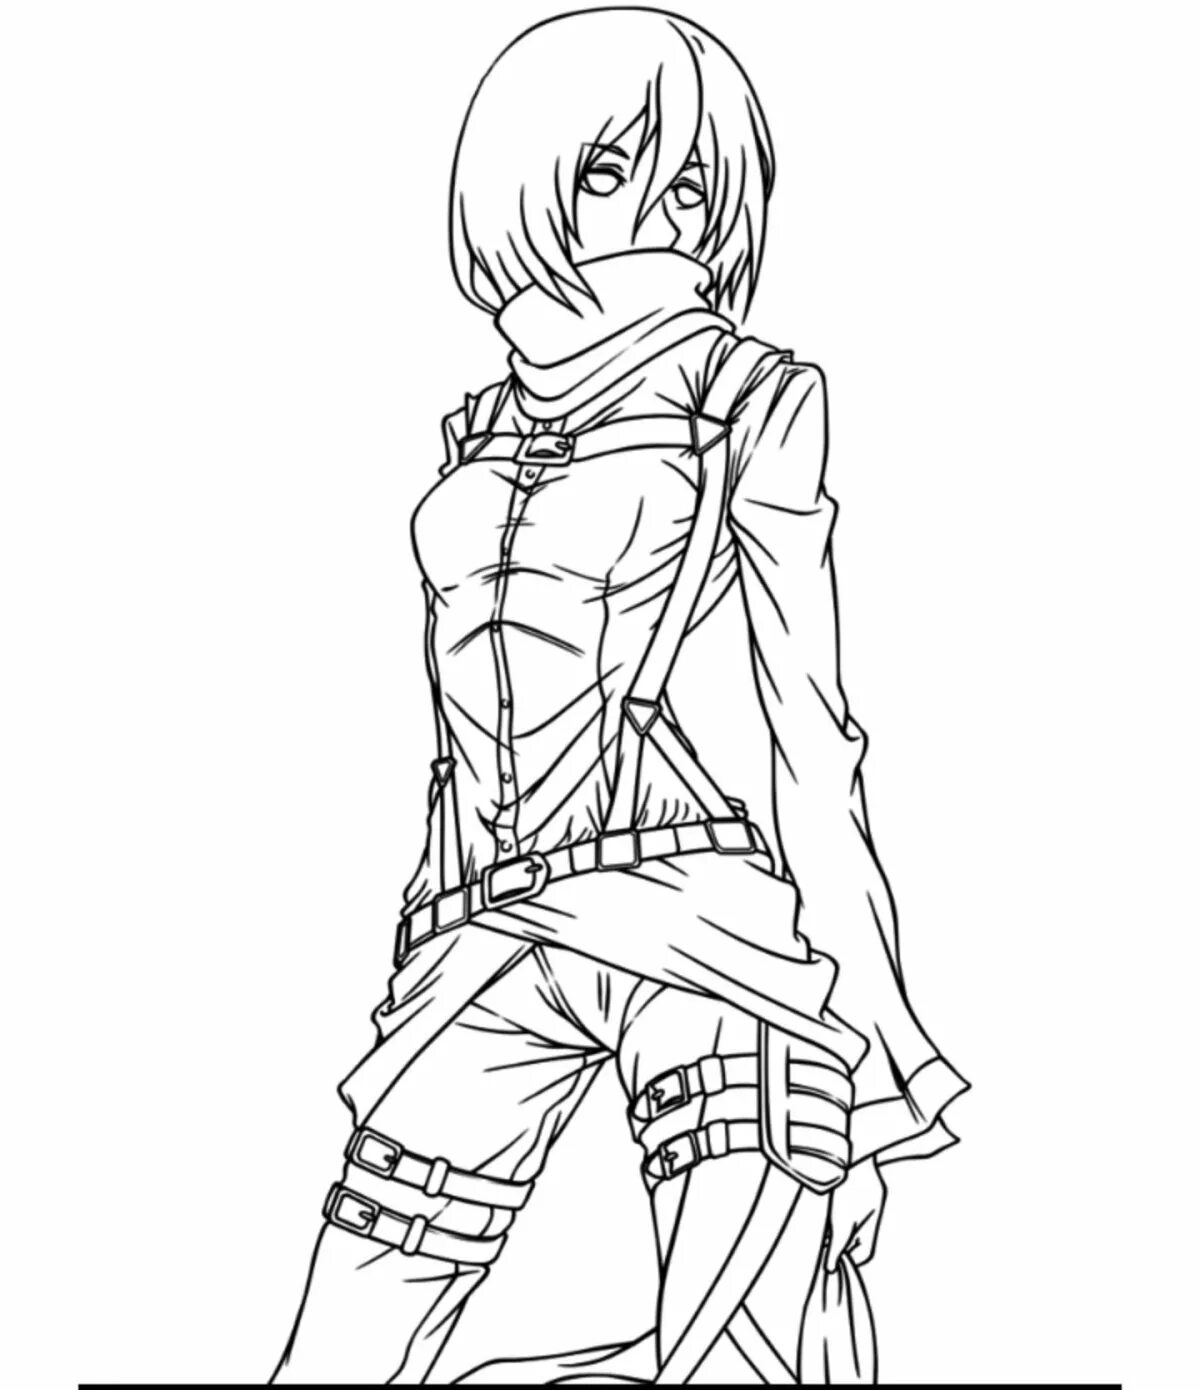 Mikasa #1